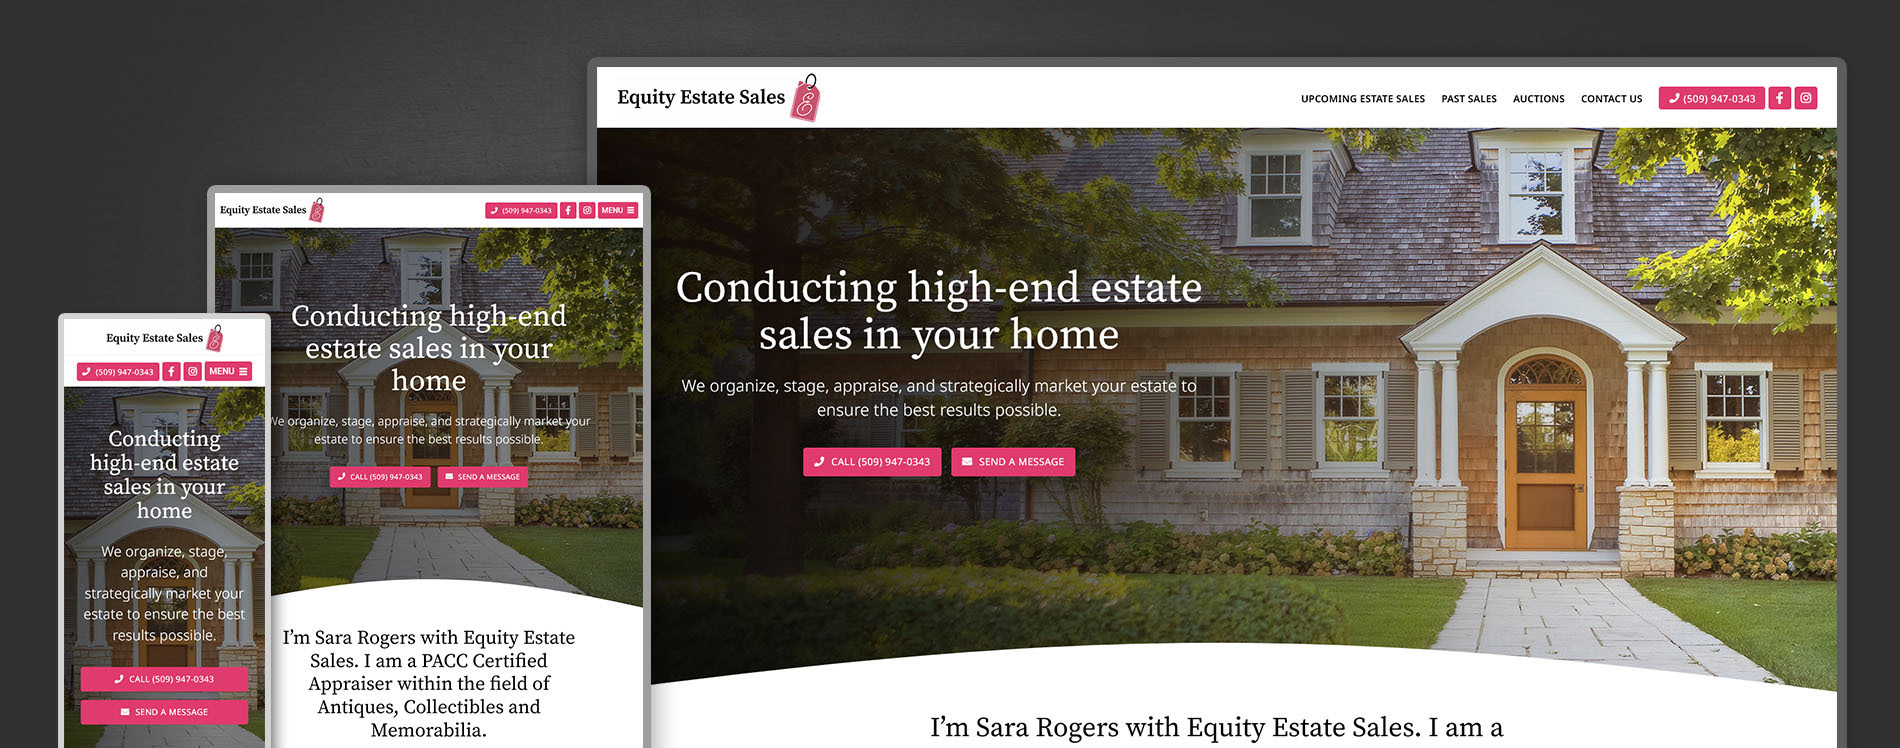 Custom Web Design and Development - Equity Estate Sales